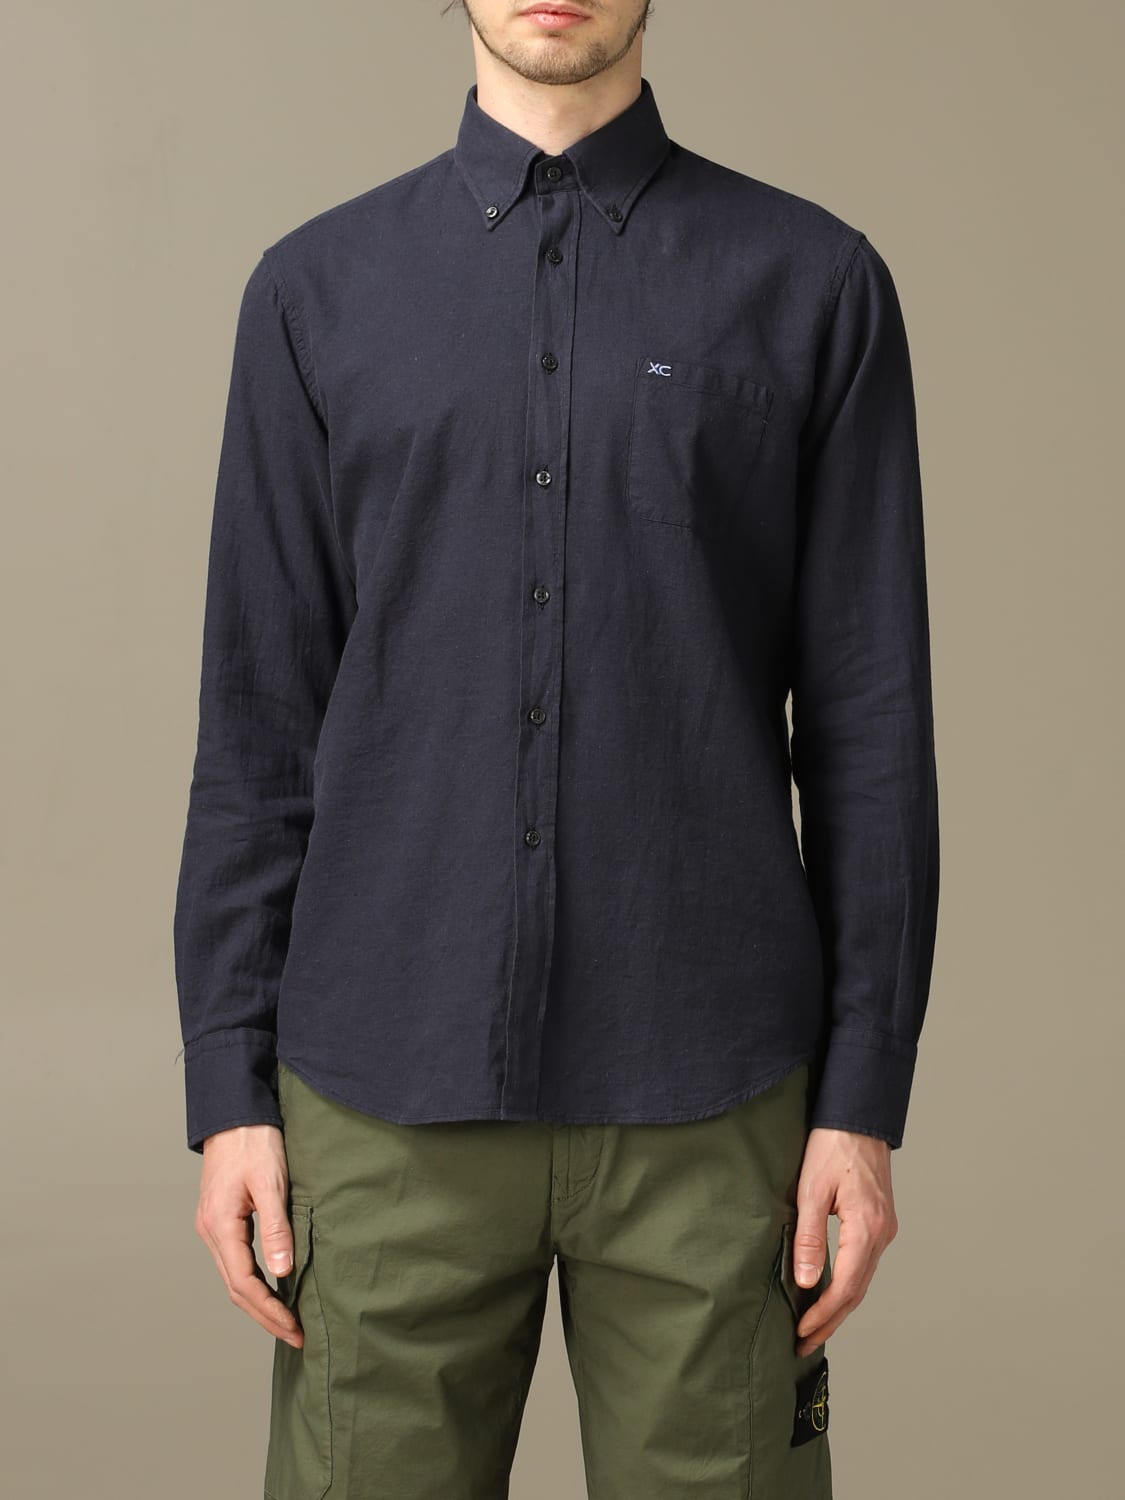 Xc -  linen shirt with button down collar